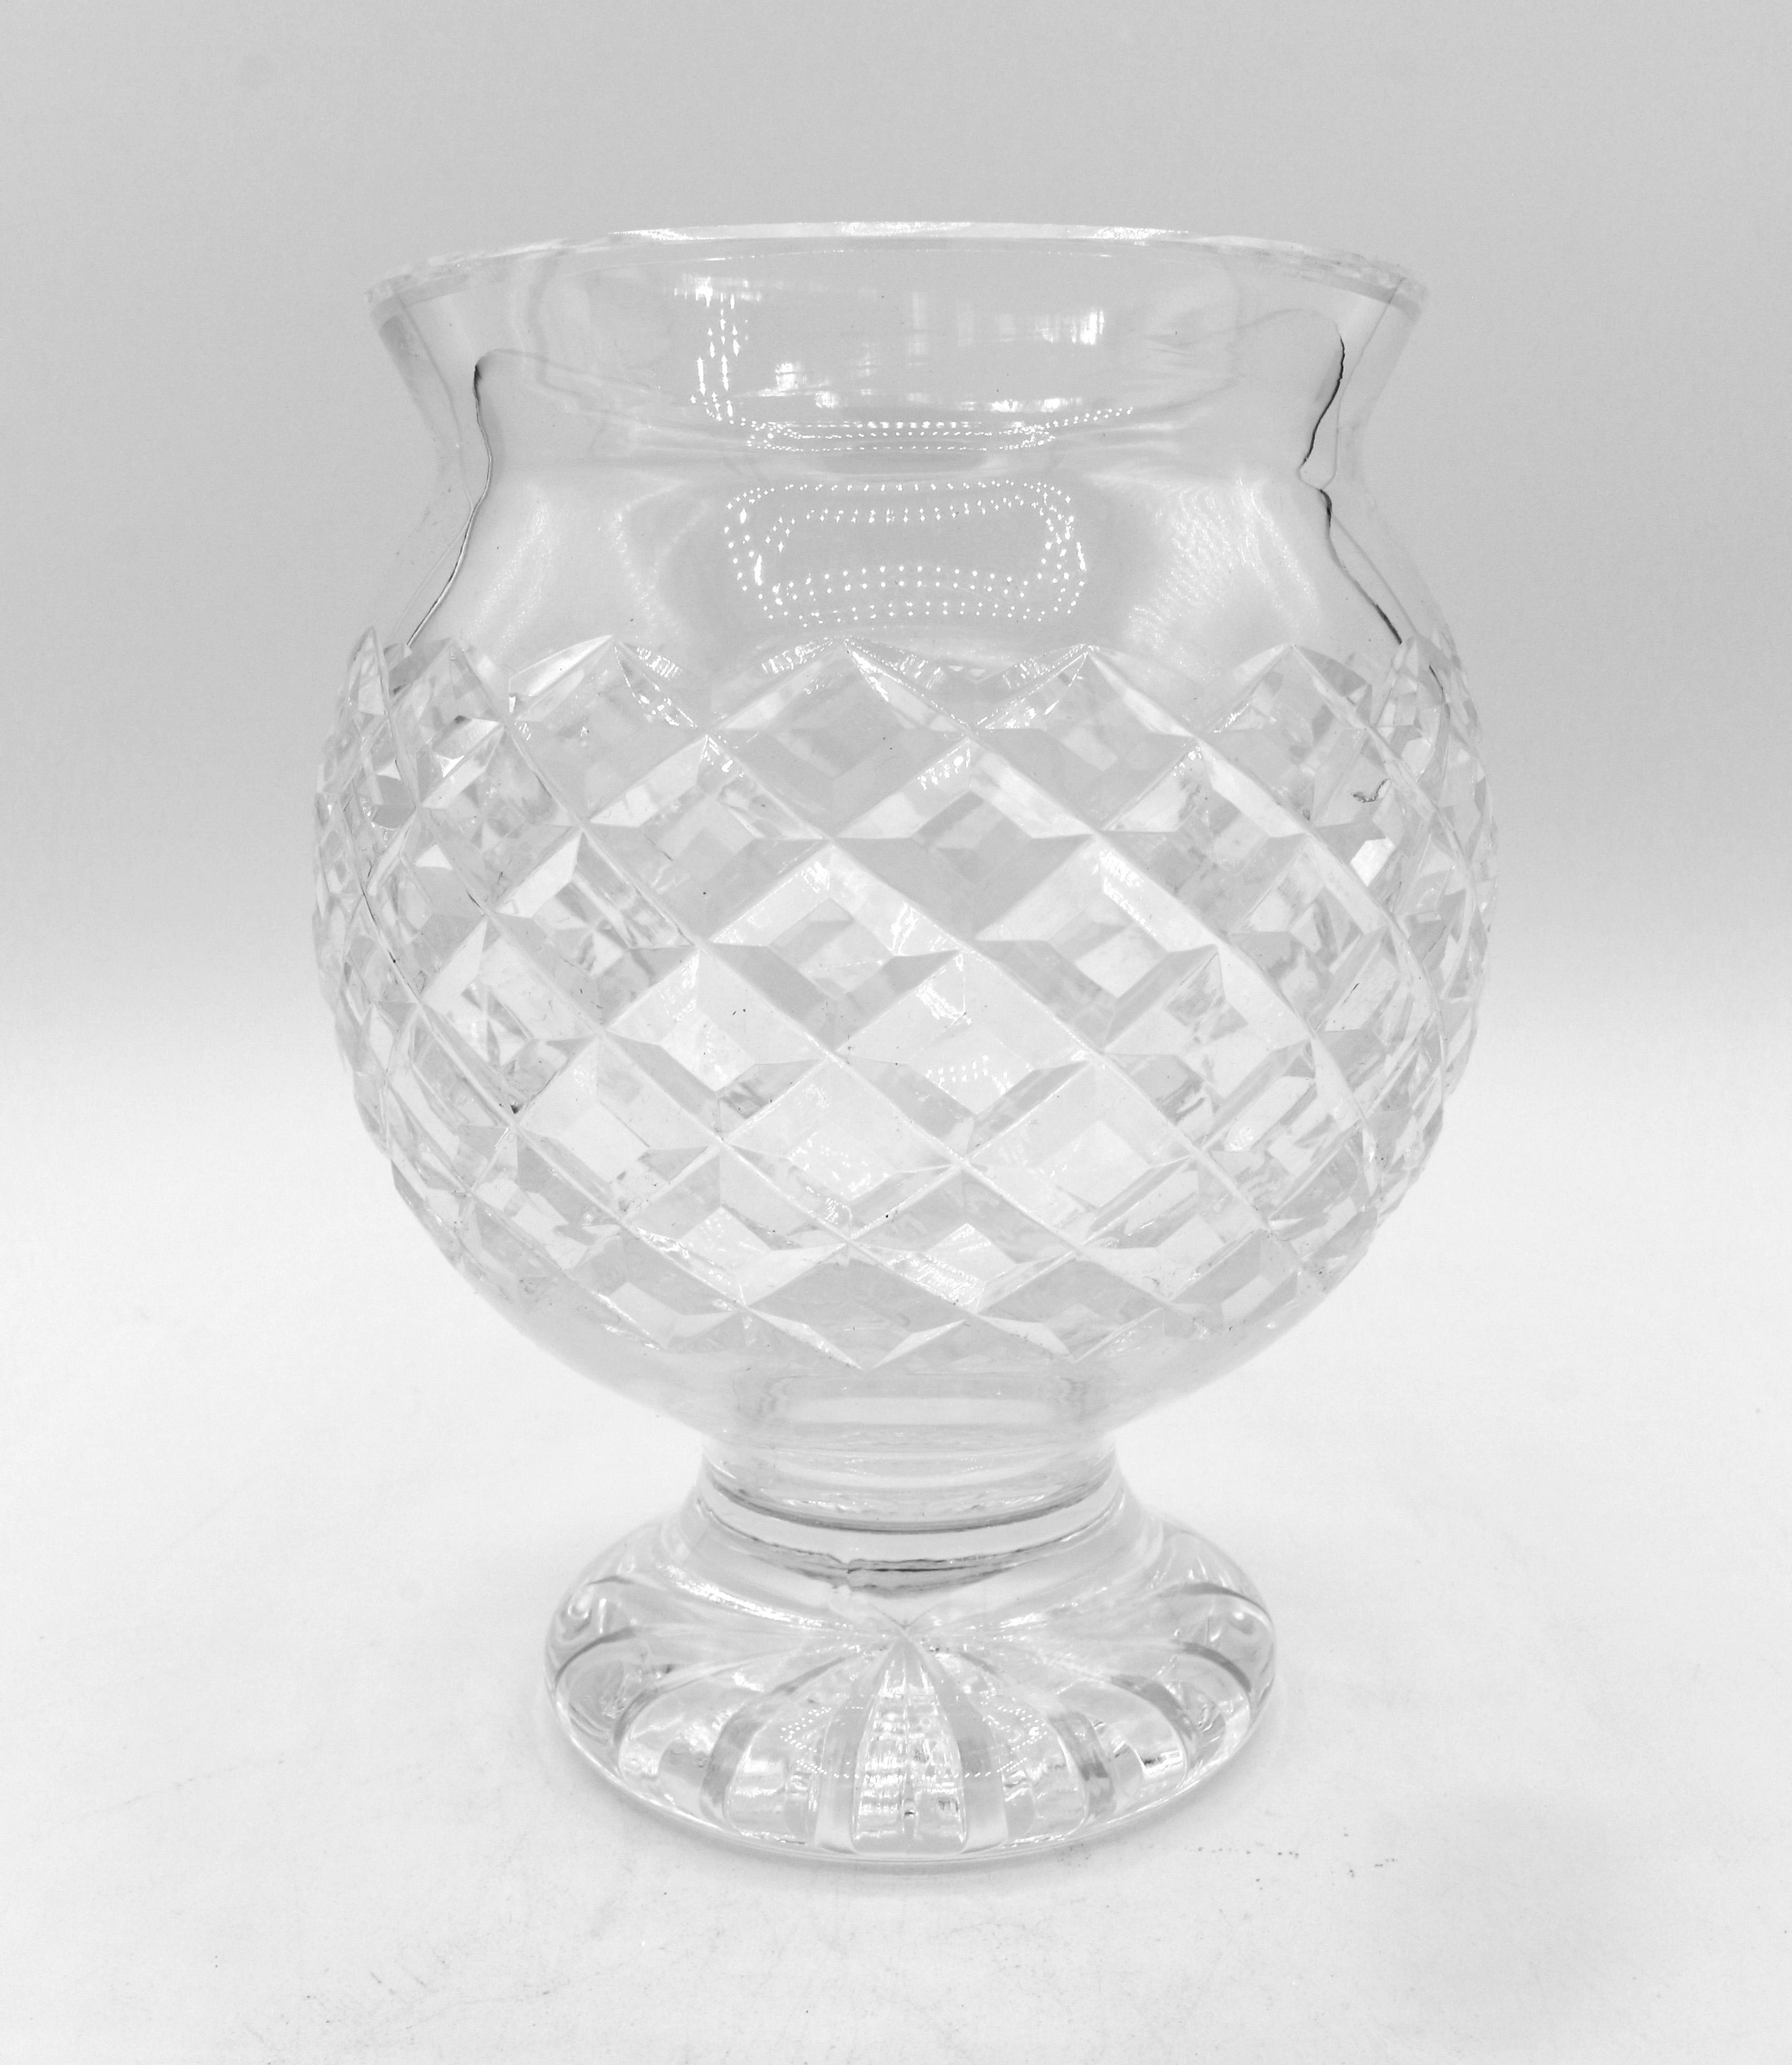 Vintage Waterford Comeragh pattern cut crystal pedestal base vase. Ideal as a rose bowl or low table centerpiece. Provenance: Estate of Katharine Reid, former director Cleveland Museum of Art.
6 1/2